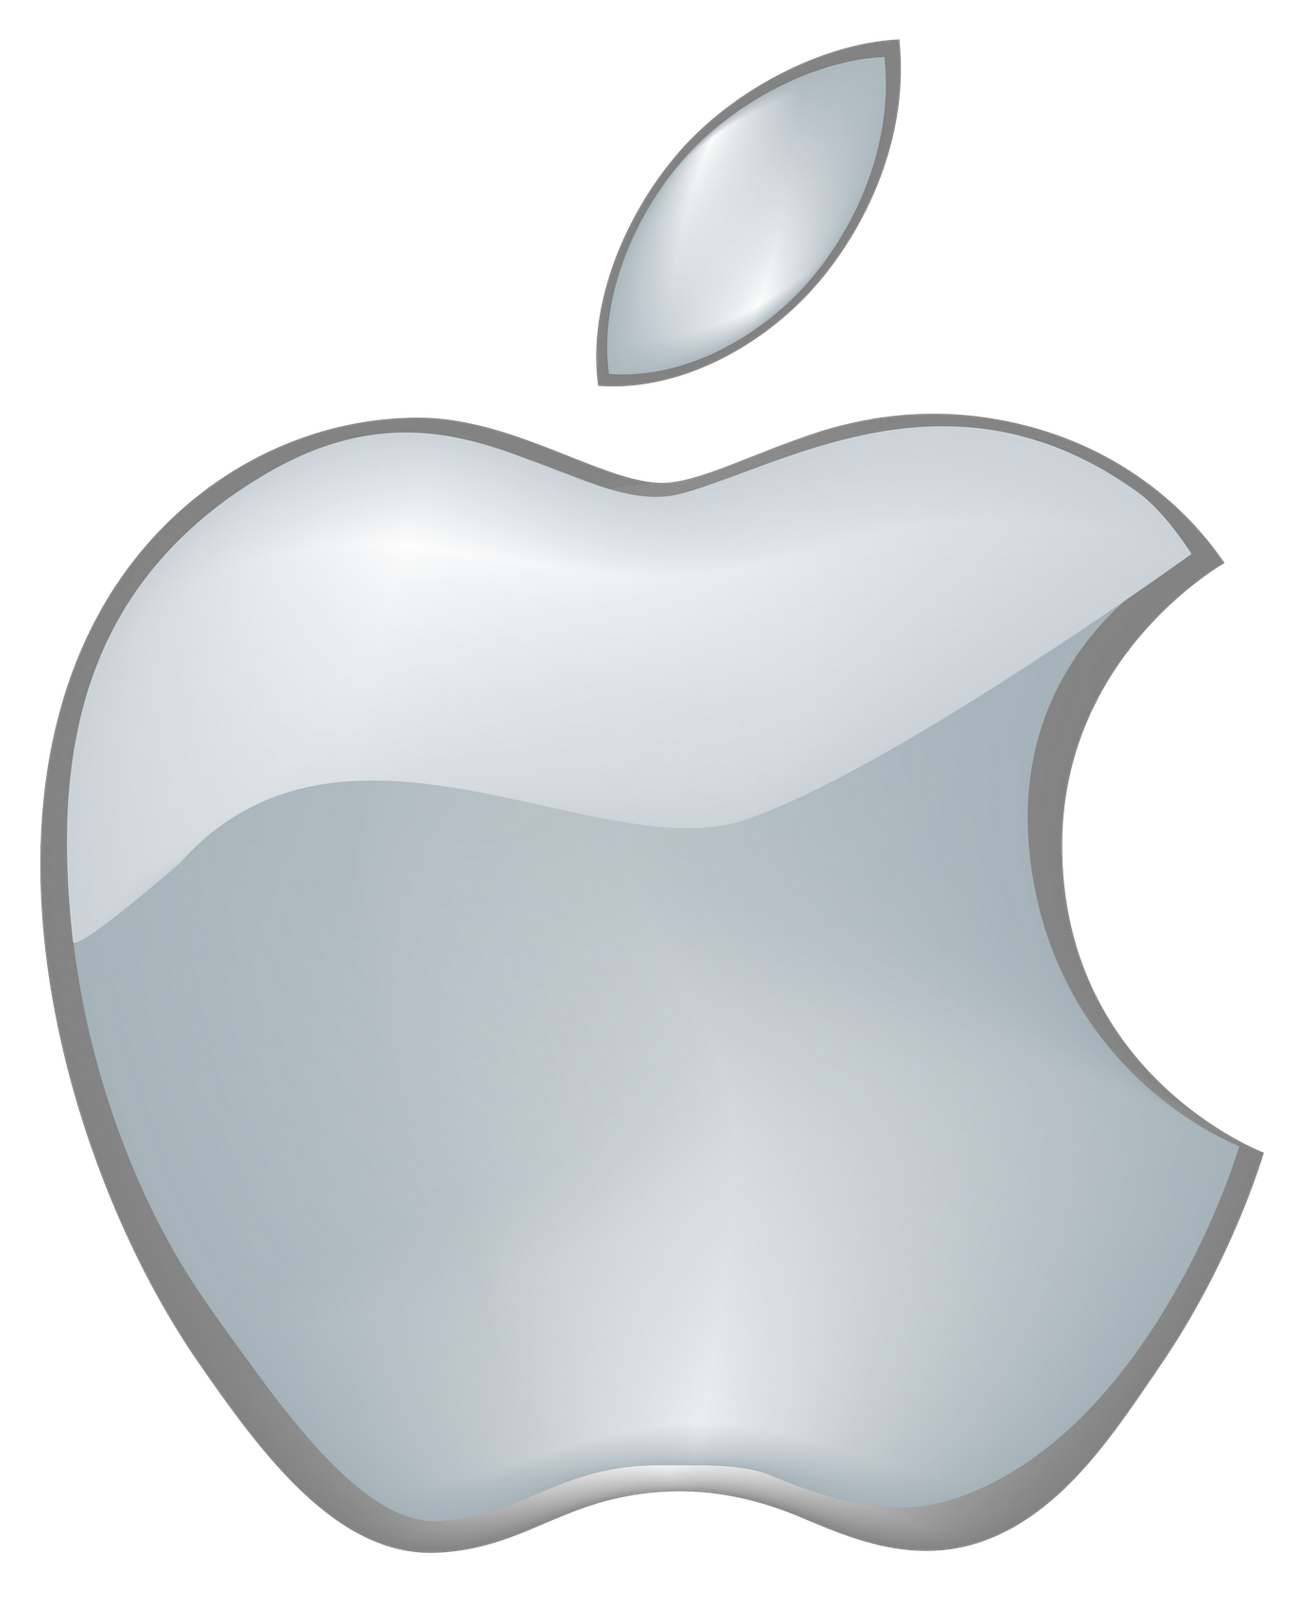 Apple Music Logo Png Transparent Background